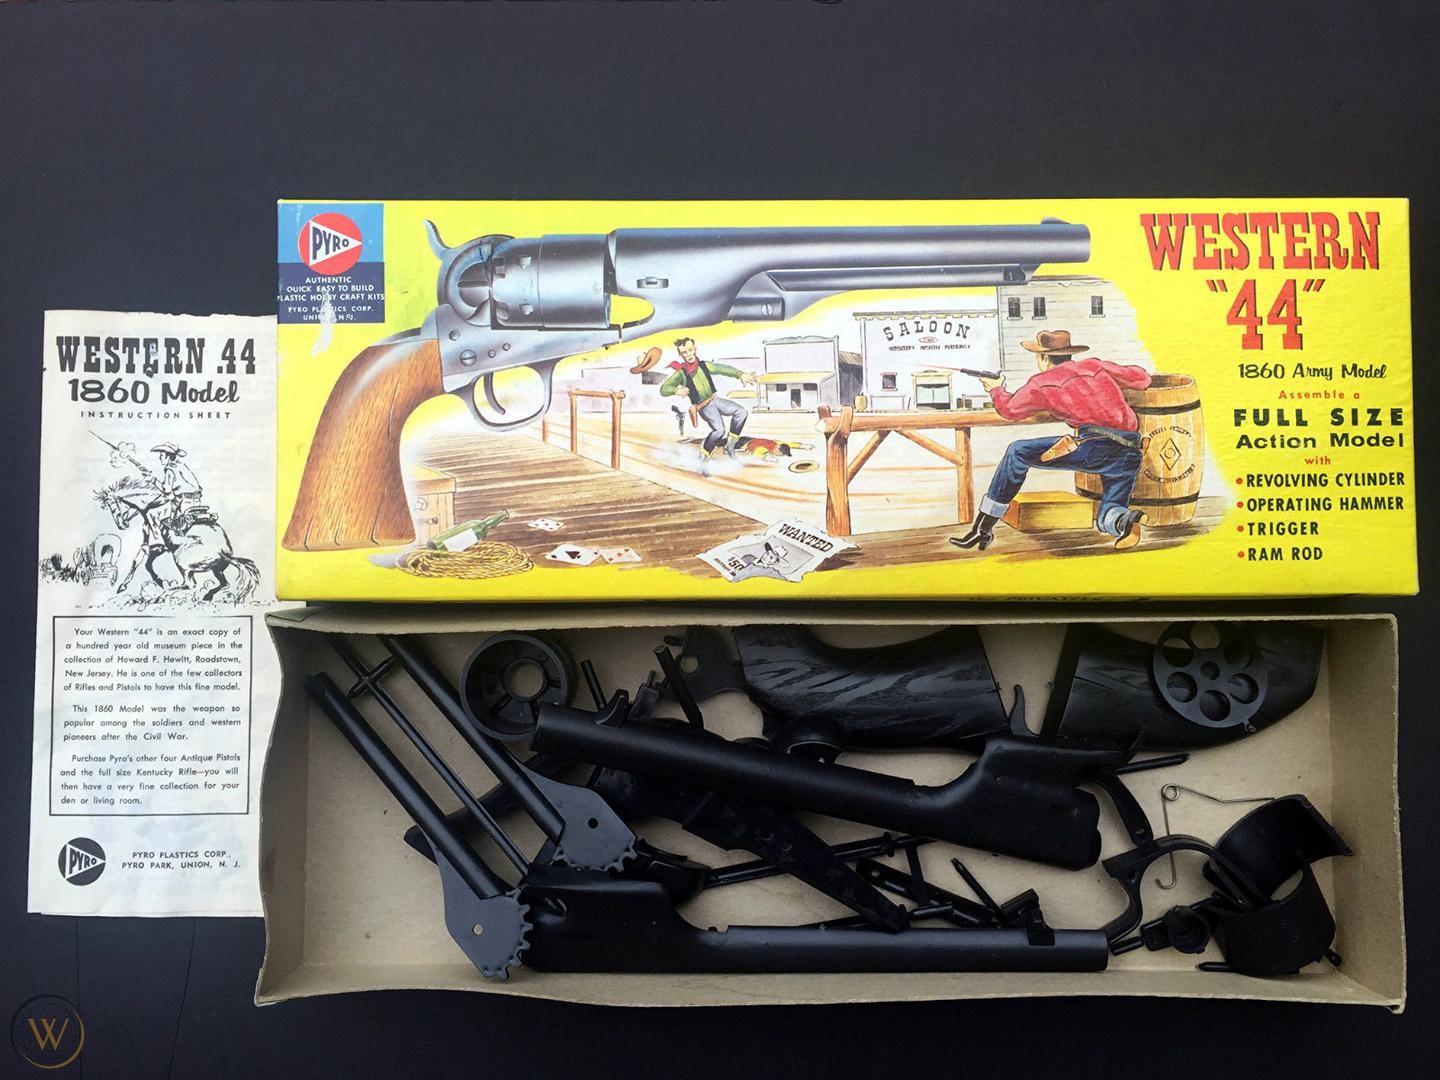 pyro-pistol-kit-c200-129-western-44_1_b949d47235e036cbaa5f0fedf23bf834.jpg